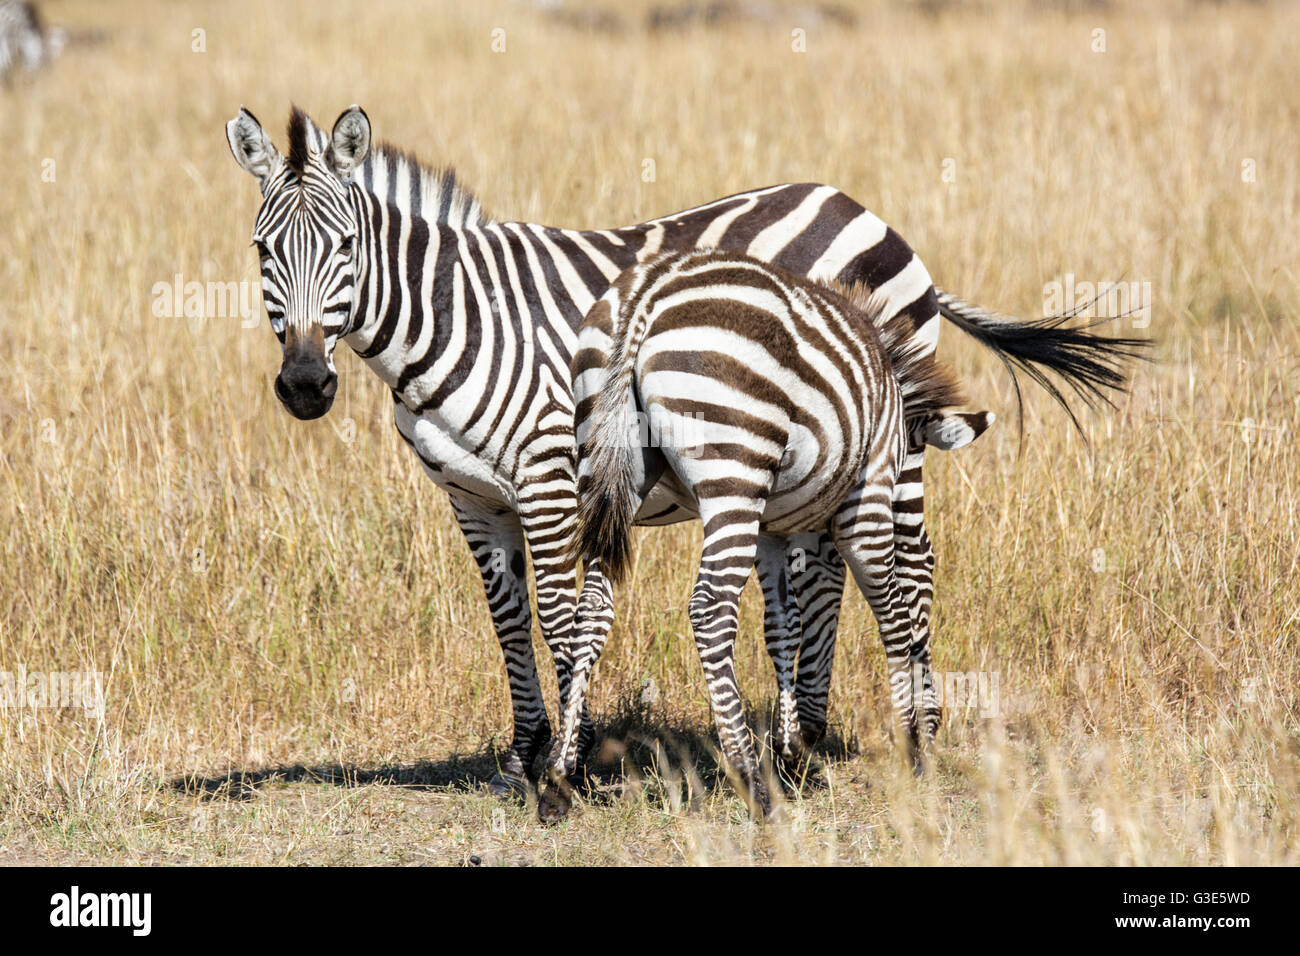 Le zèbre de Burchell, Equus quagga burchellii, Mère à la caméra et de soins infirmiers au Colt, Masai Mara National Reserve, Kenya, Africa Banque D'Images